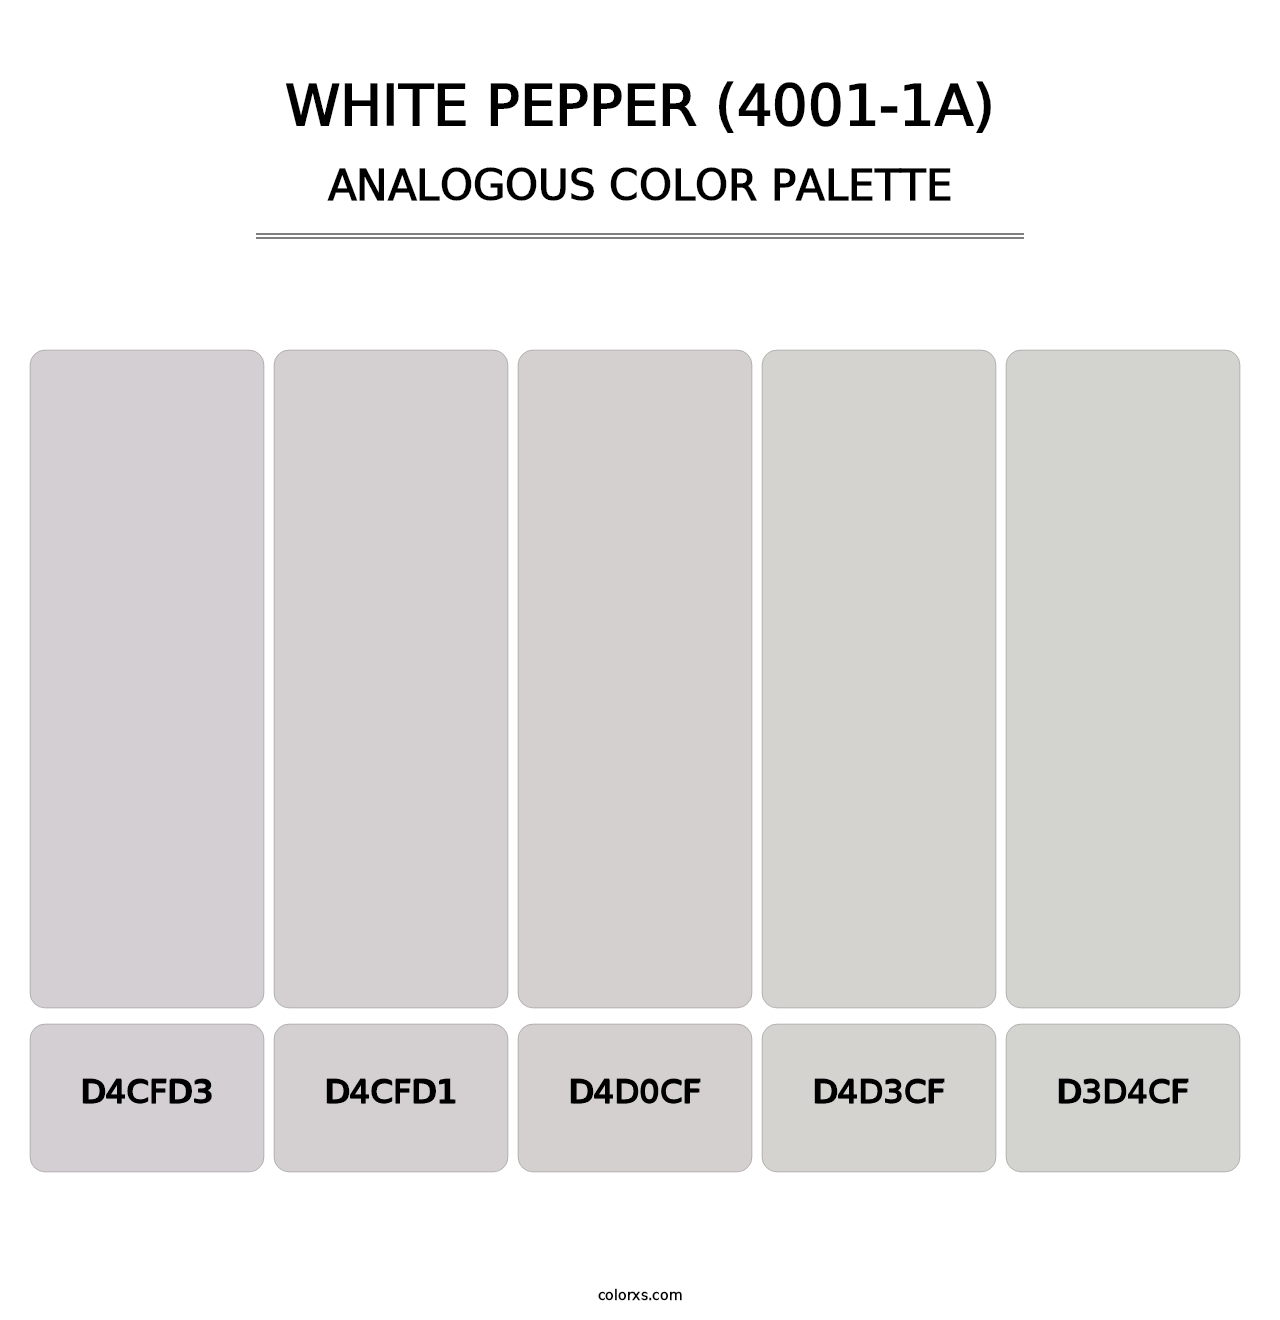 White Pepper (4001-1A) - Analogous Color Palette